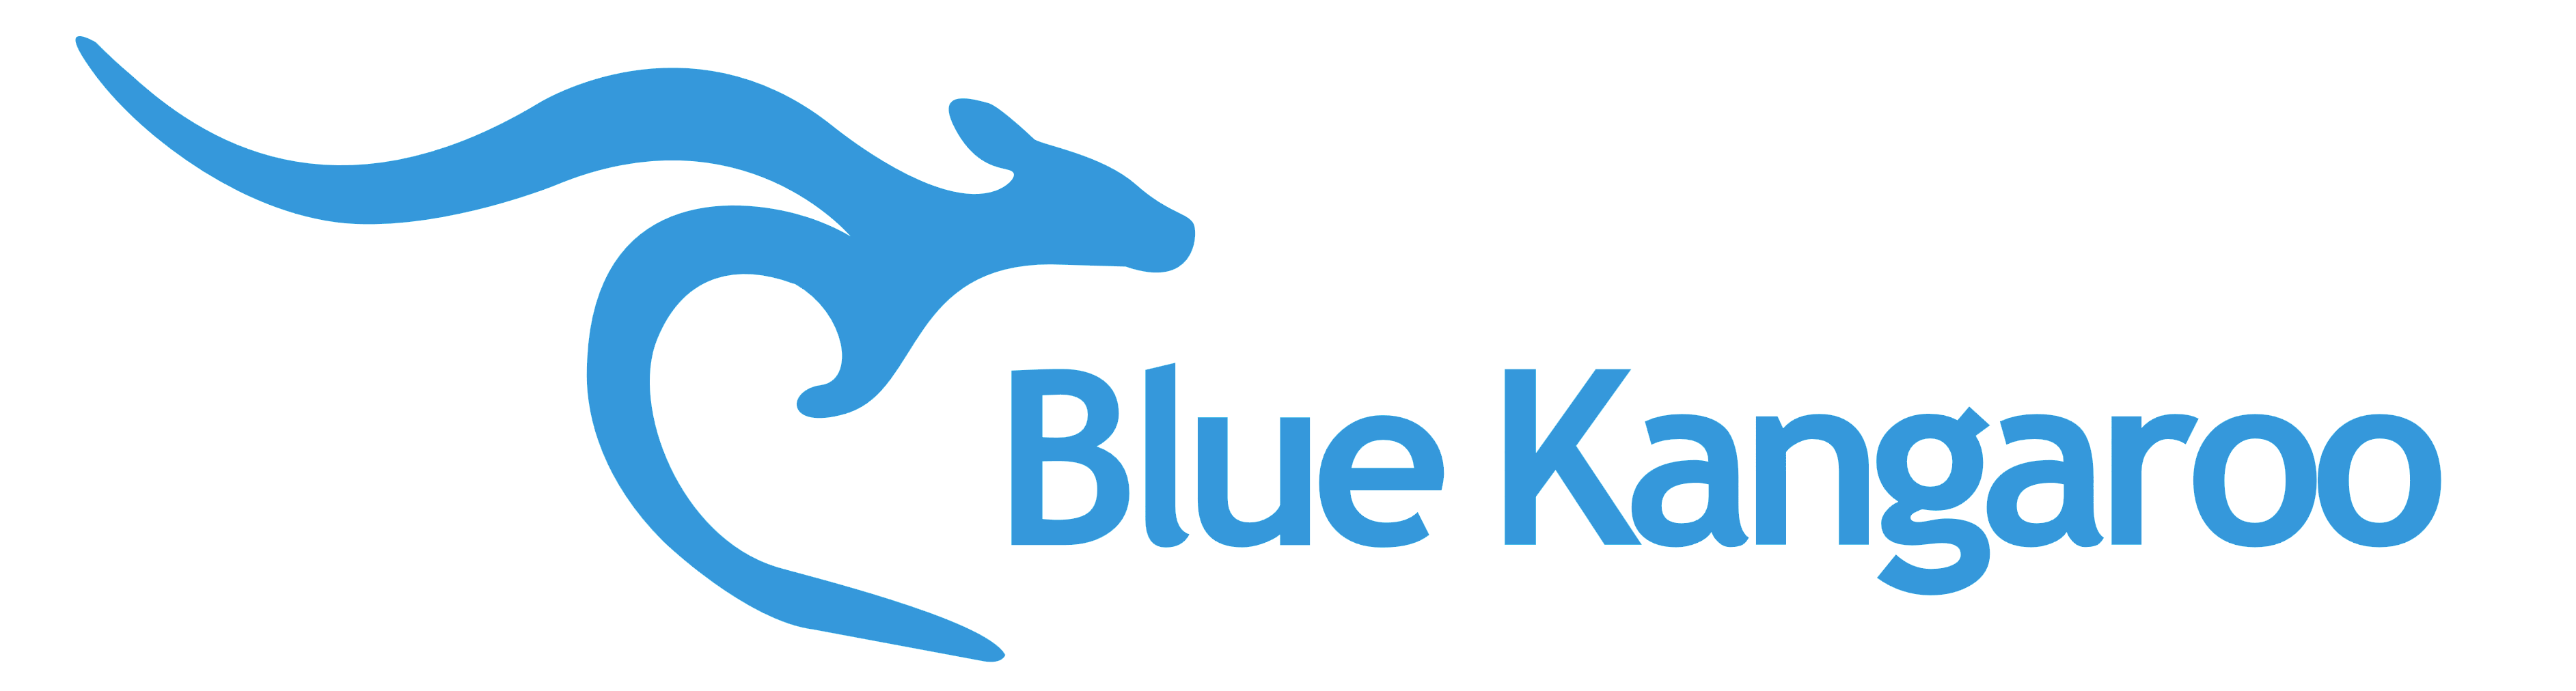 Логотип кенгуру. Кенгуру логотип. Кенгуру магазин логотип. Фирма с кенгуру на эмблеме. Blue Kangaroo.